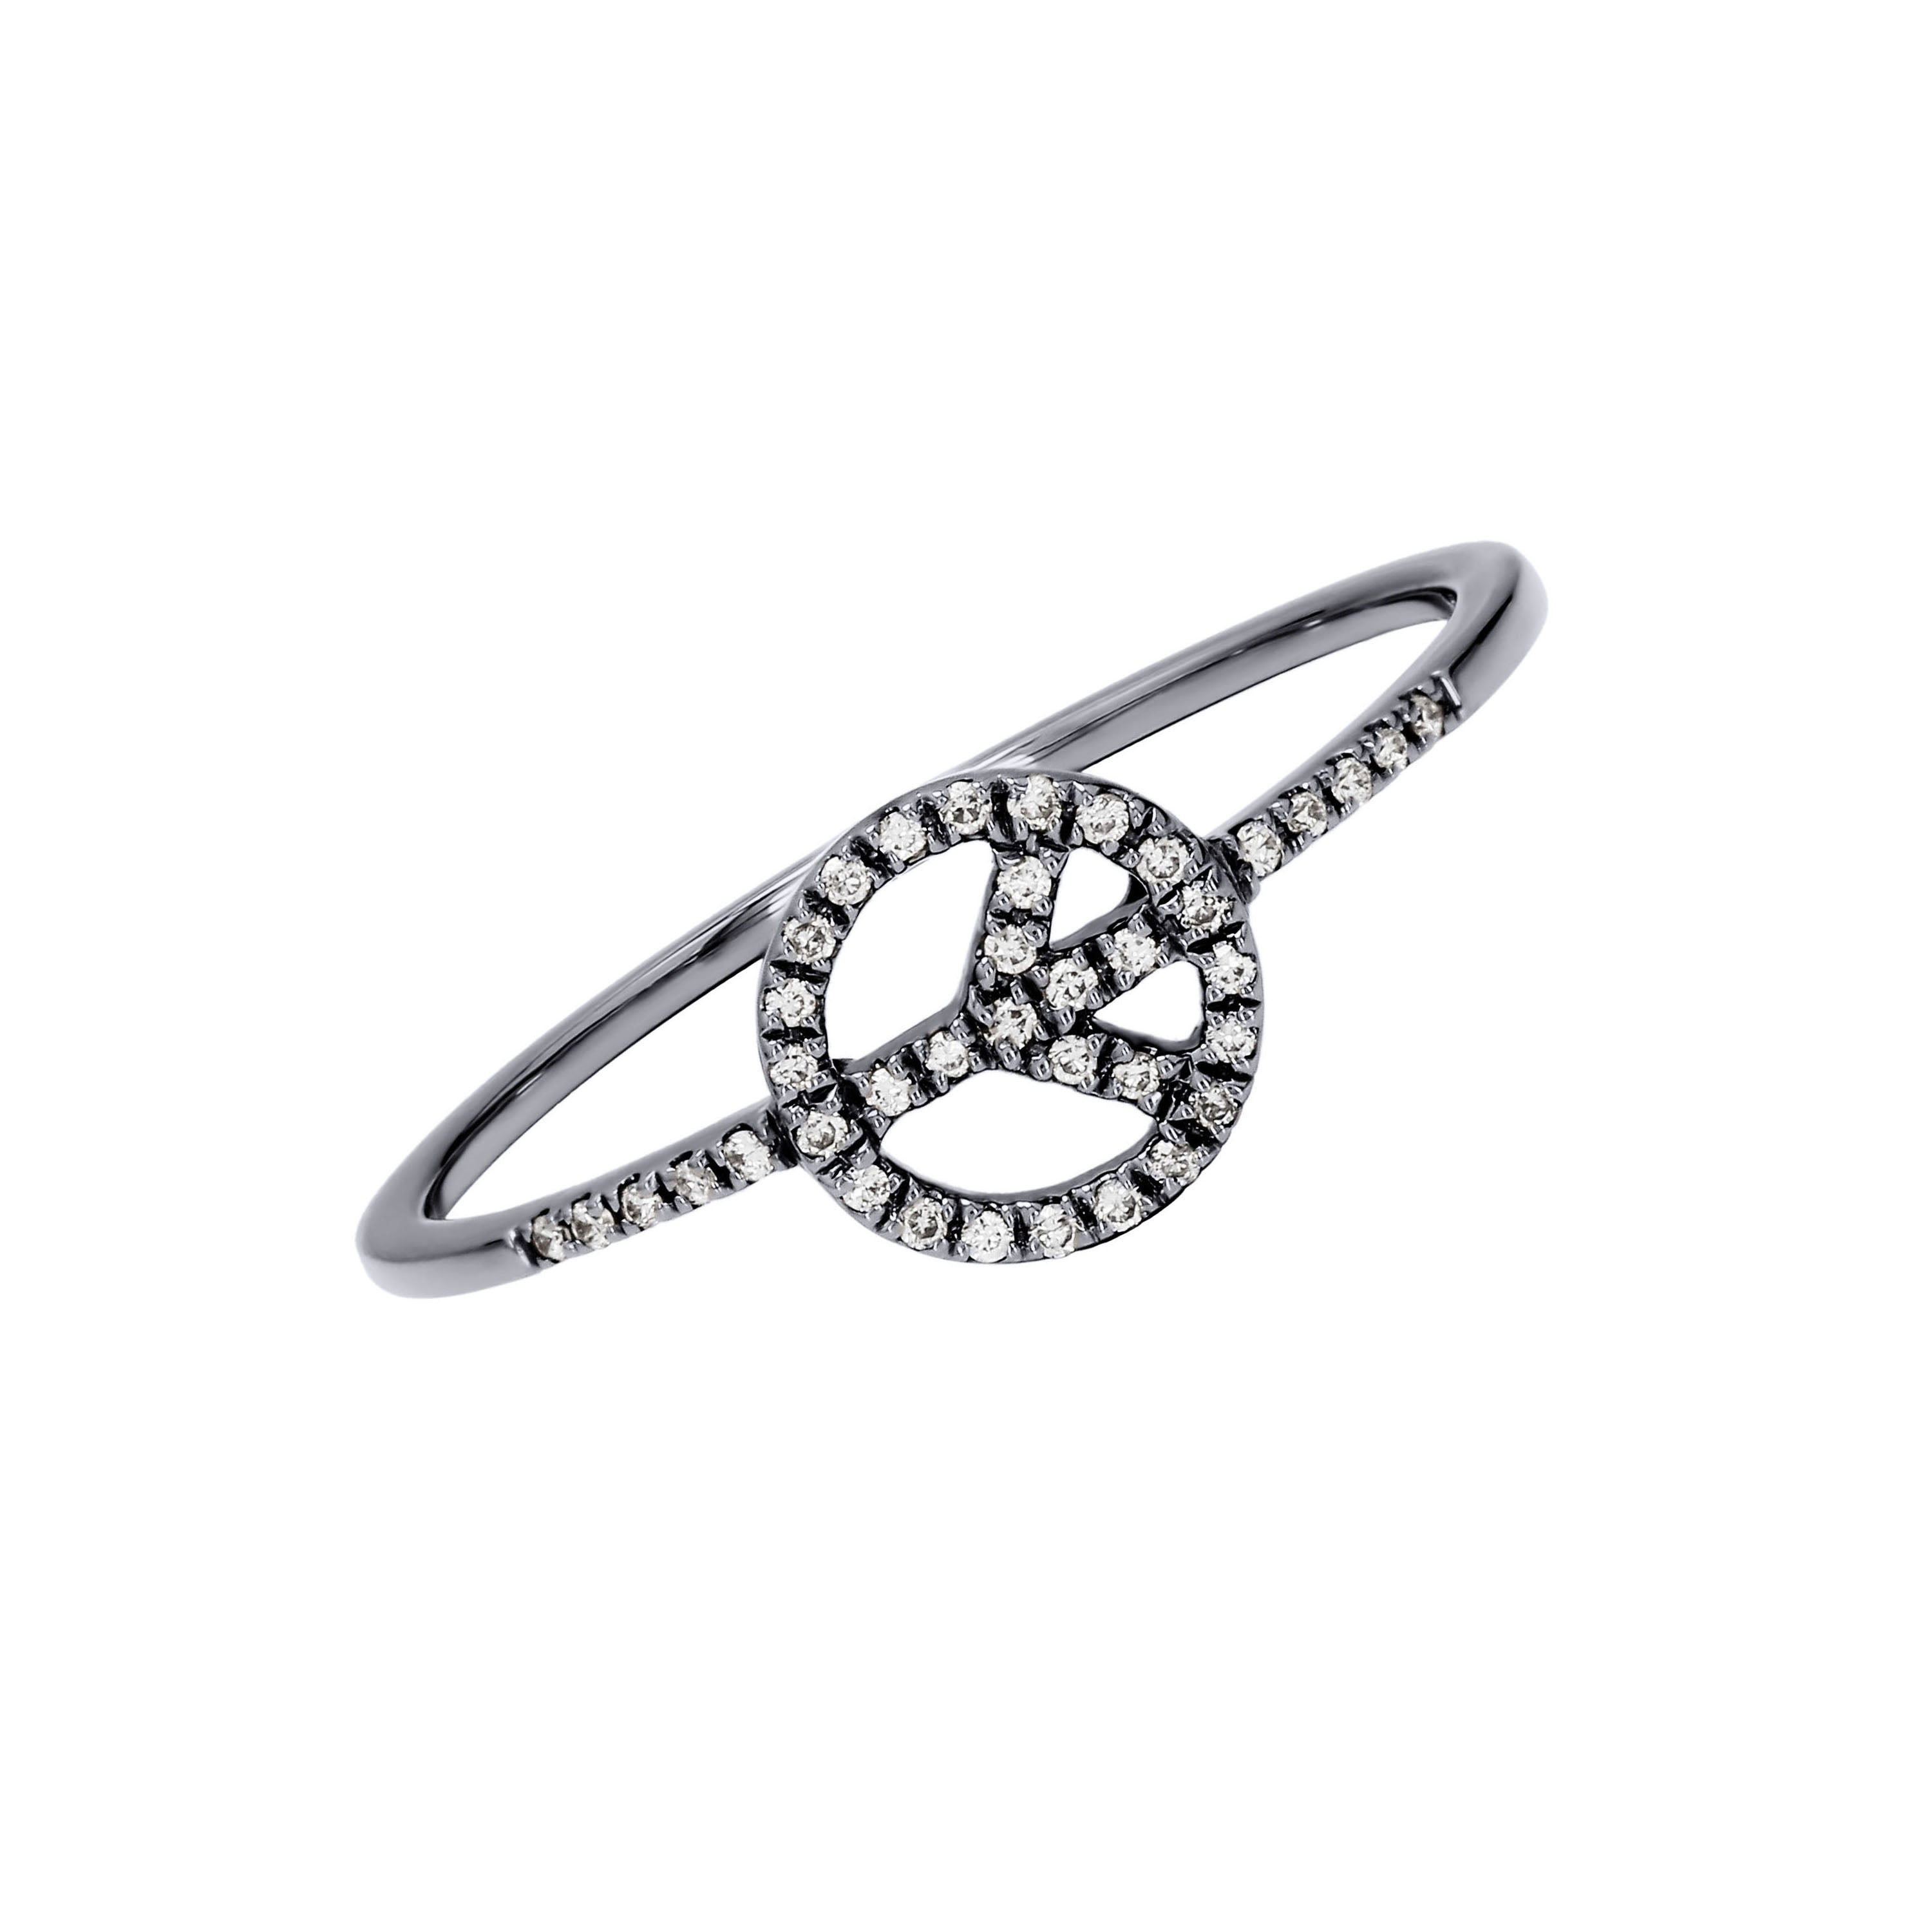 Adamar Jewels Peace Ring in 18K black rhodium set with diamonds